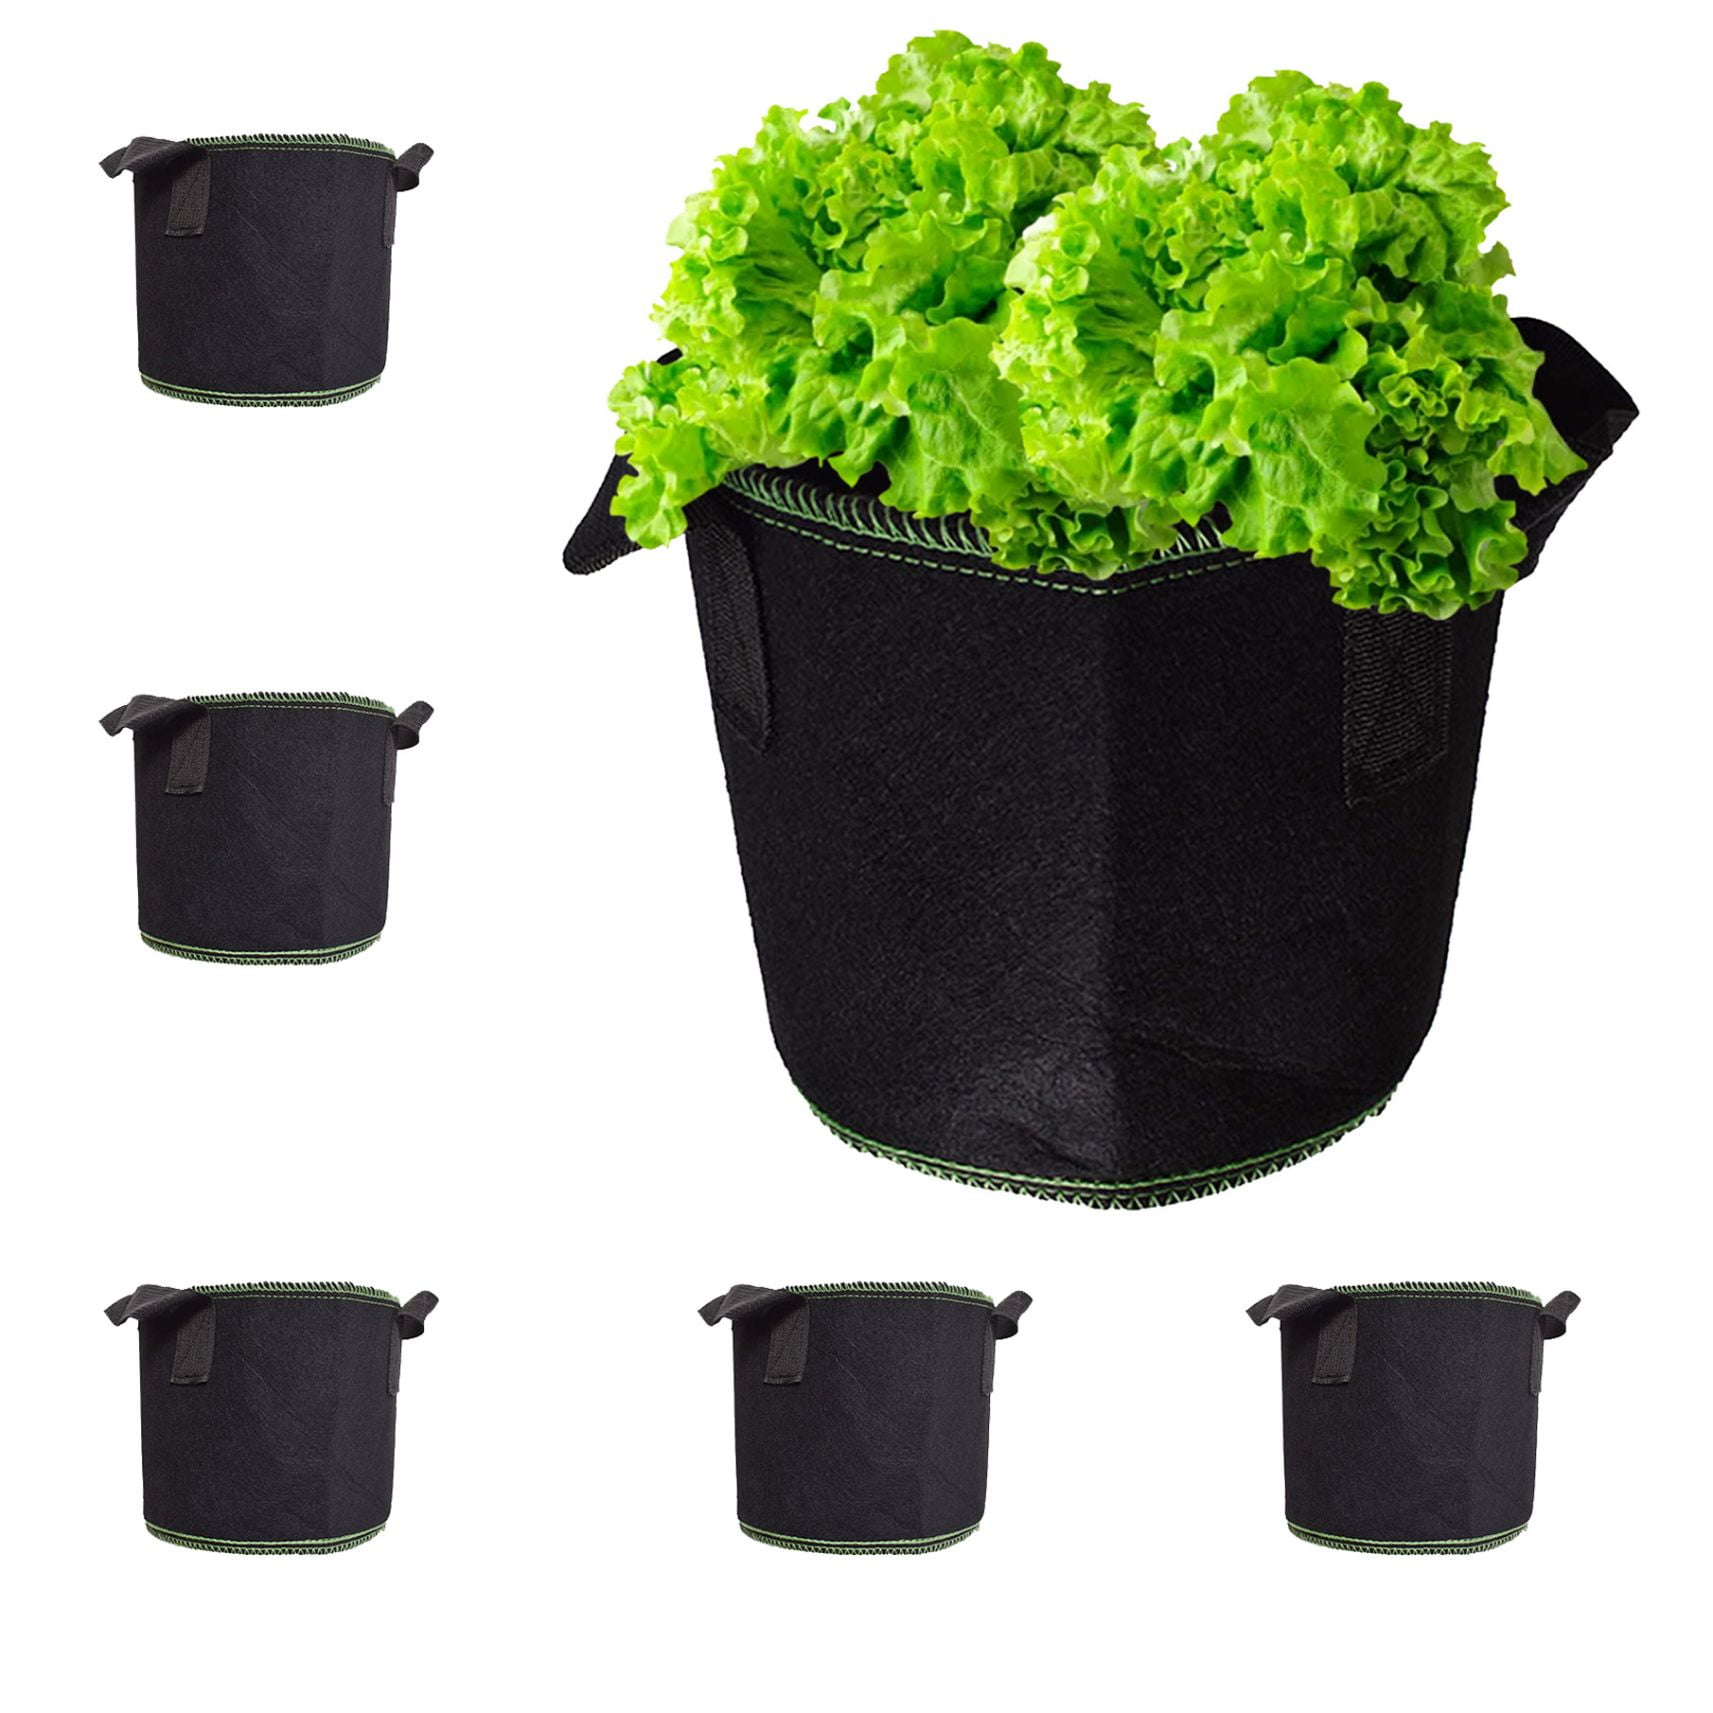 Prime 5-Pack 7 Gallon Grow Bags Aeration Fabric Pots Soil w/ Handles Plant Smart